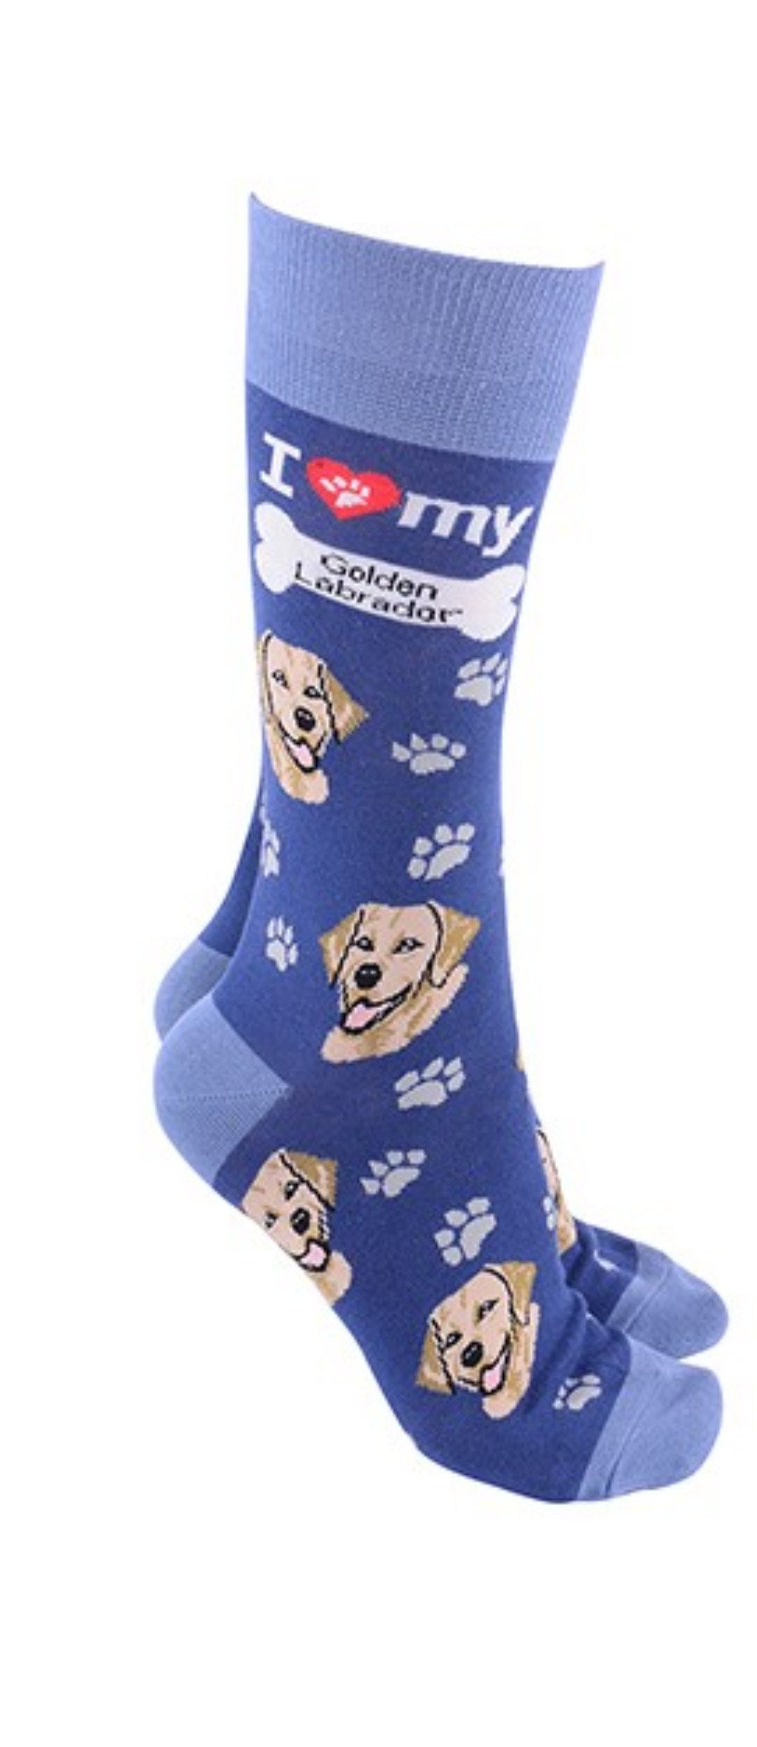 Golden Labrador design socks with 'I love my Golden Labrador' text, quality Unisex One Size stocking filler